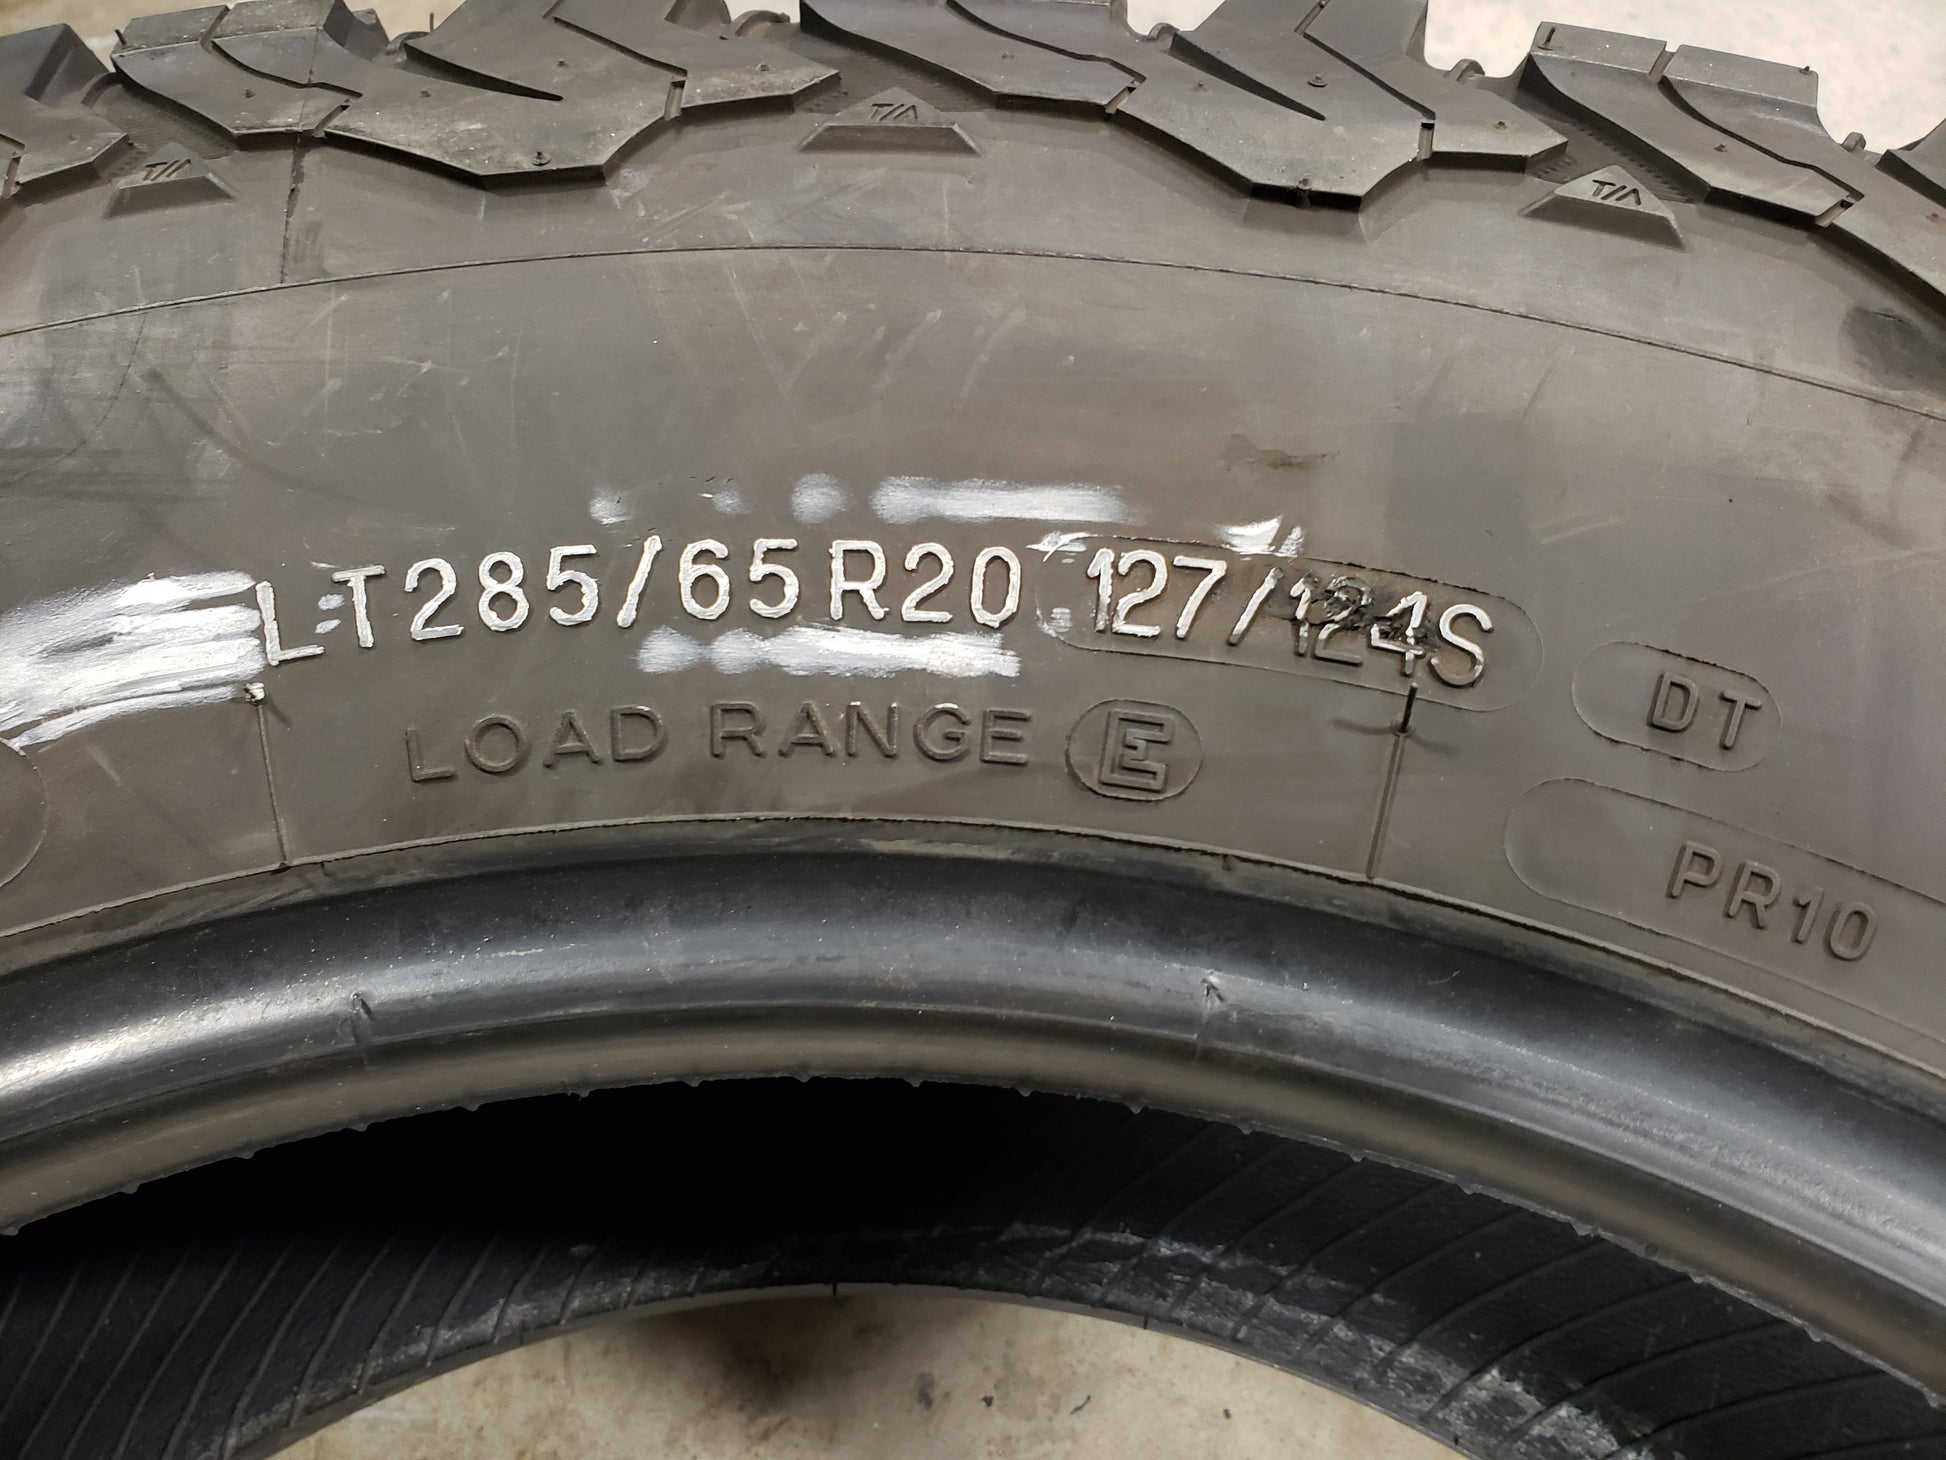 SINGLE 285/65R20 BFGoodrich All-Terrain T/A K02 127/124 S E - Used Tires